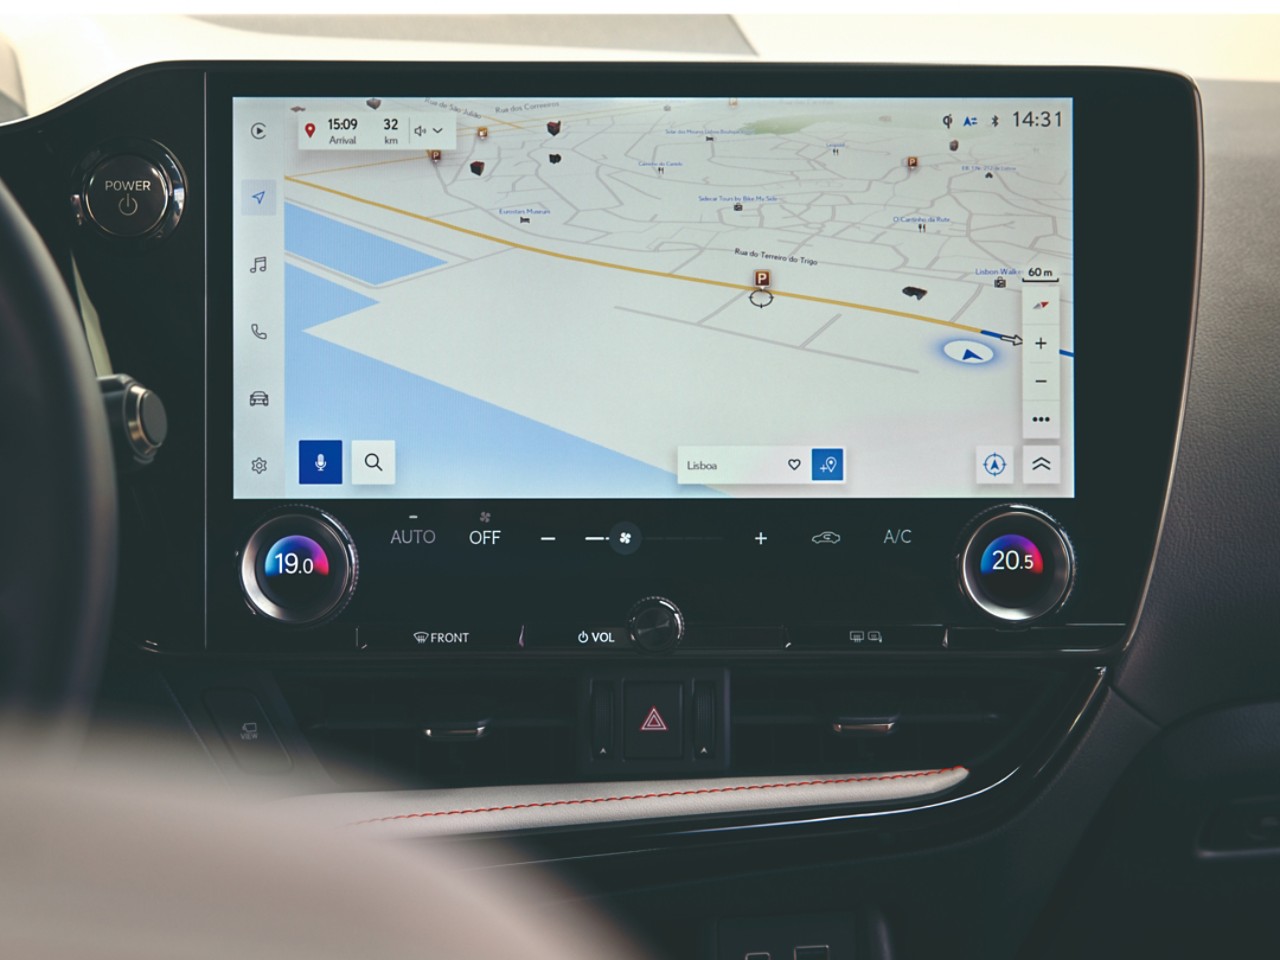 Navigation on a Lexus multimedia screen